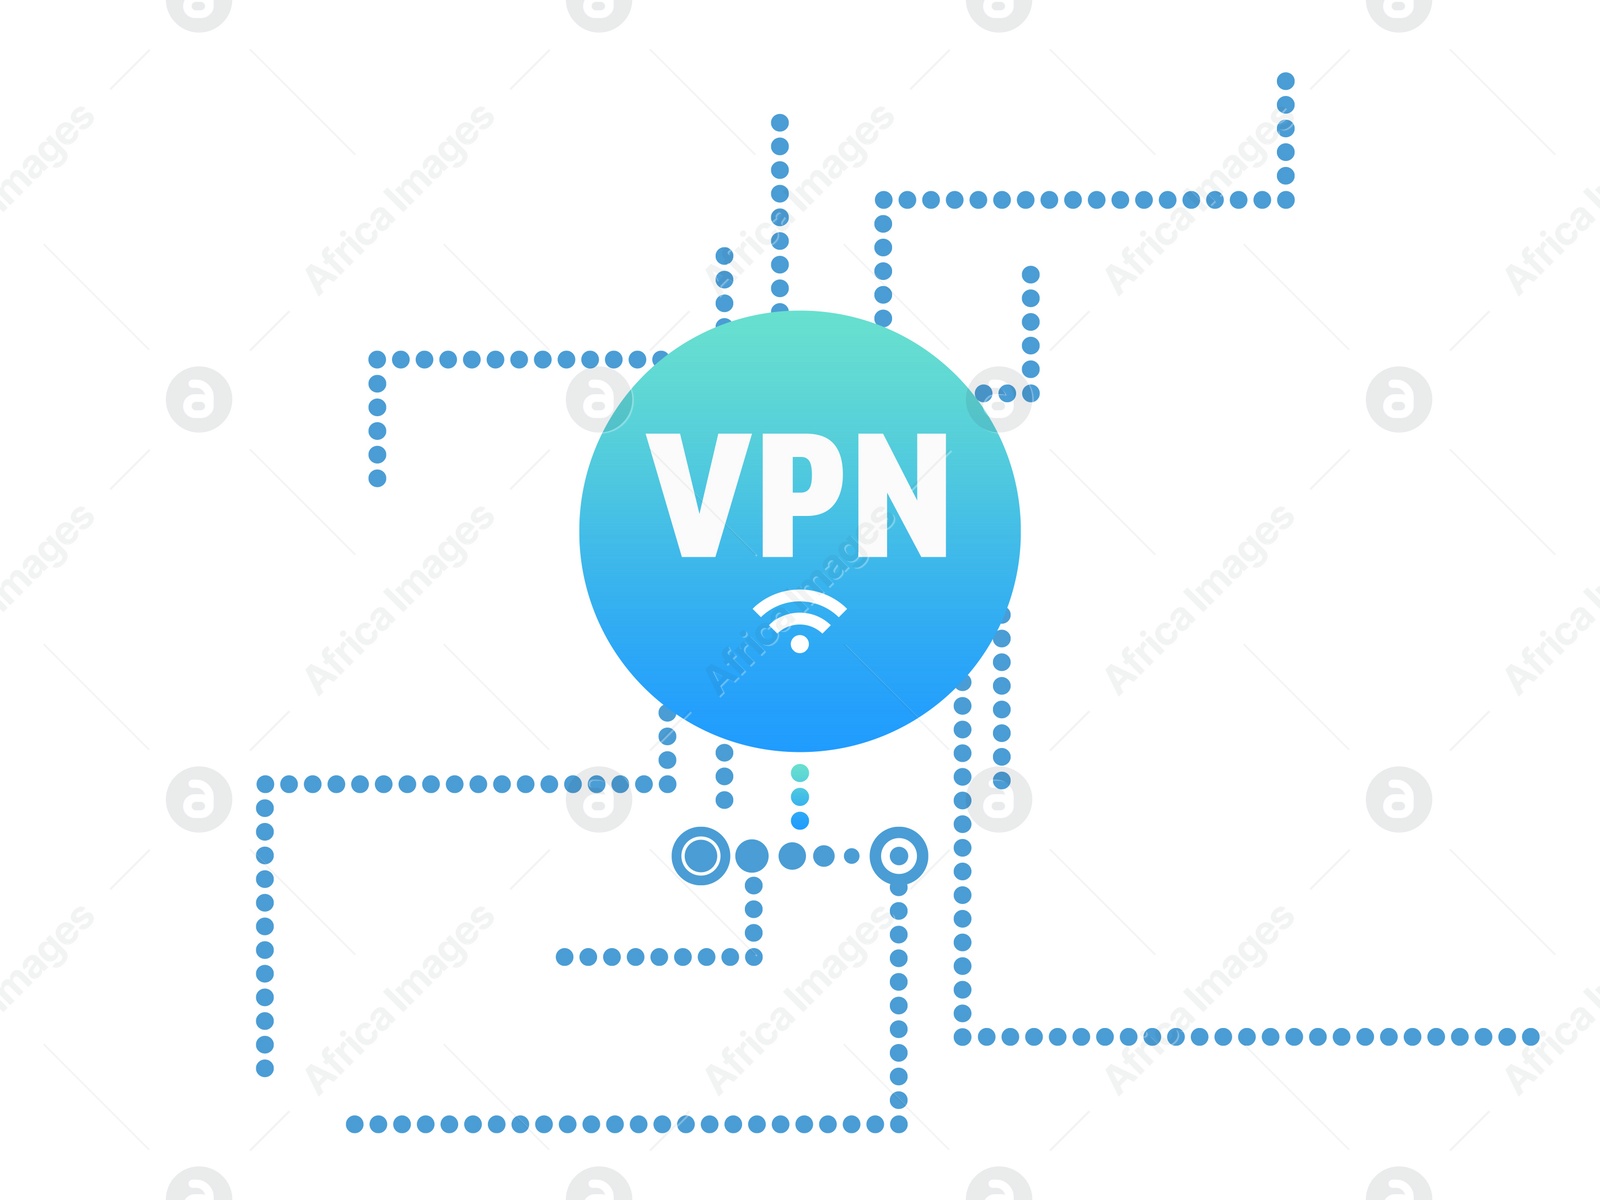 Illustration of Concept of secure network connection. Acronym VPN on white background, illustration